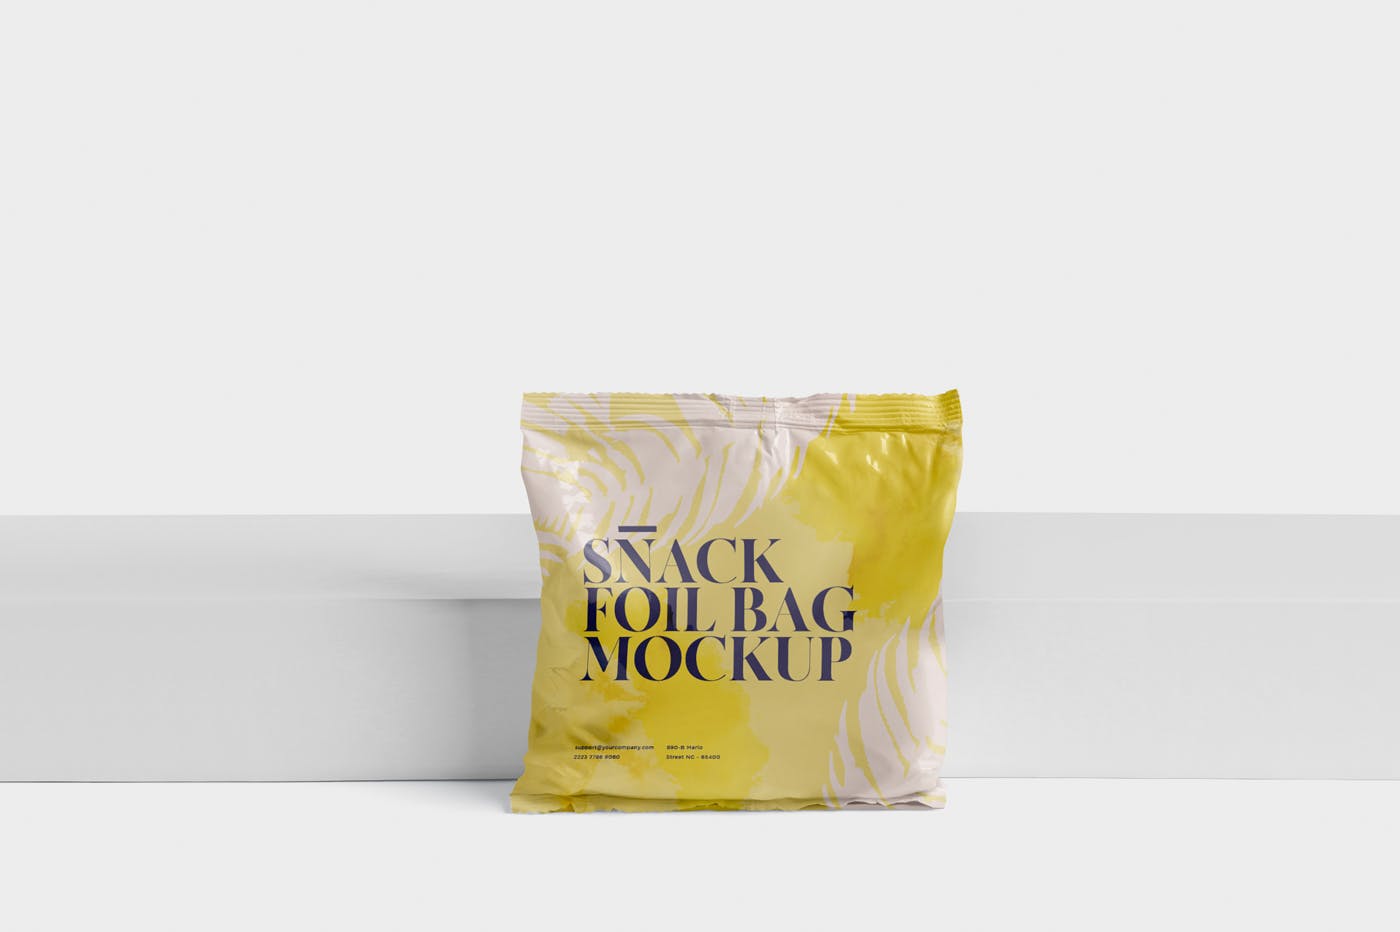 小吃零食铝箔包装袋设计图16设计网精选 Snack Foil Bag Mockup – Square Size – Small插图(3)